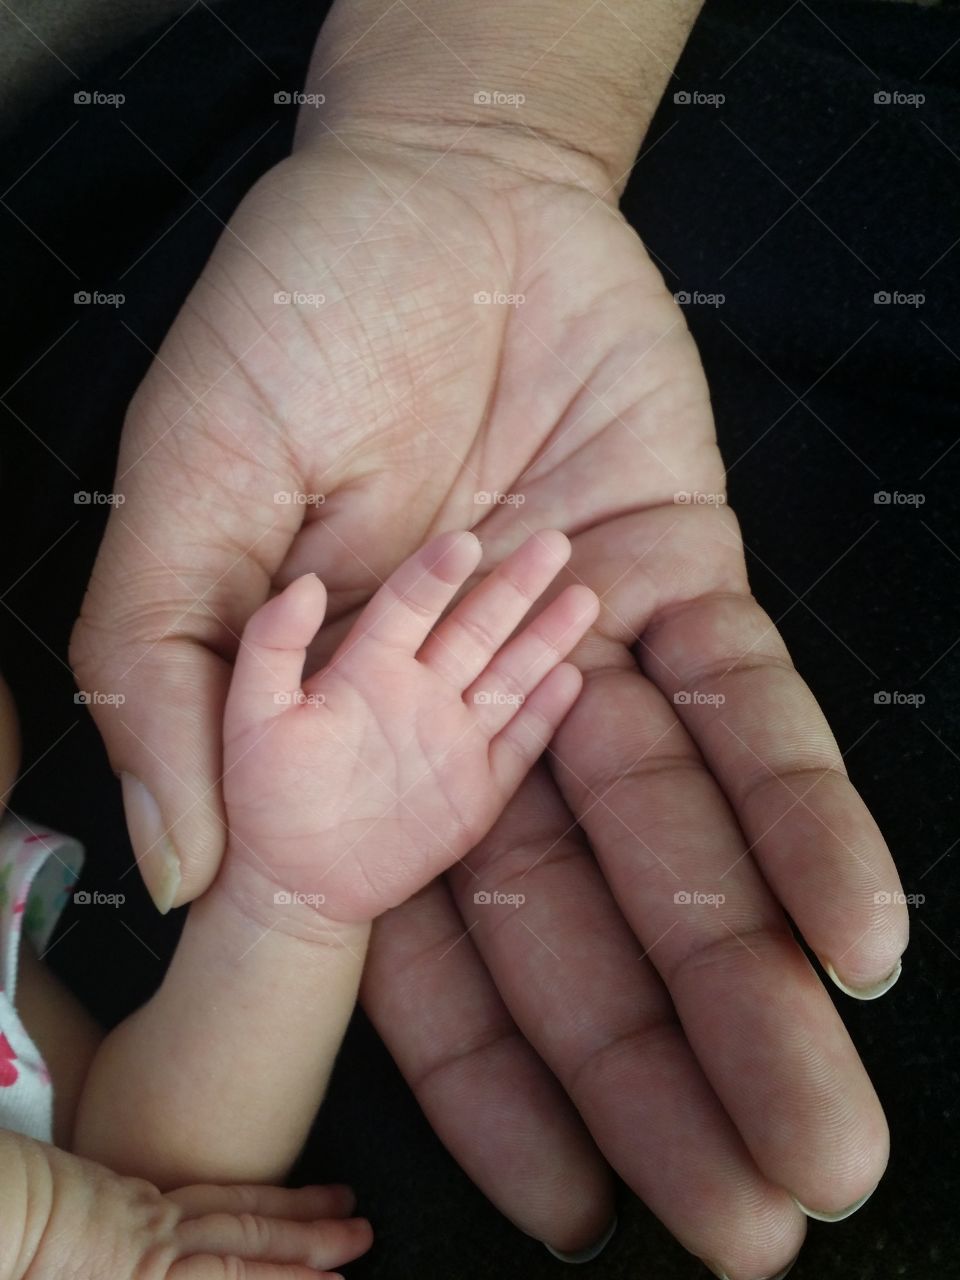 newborn hand in father's hand